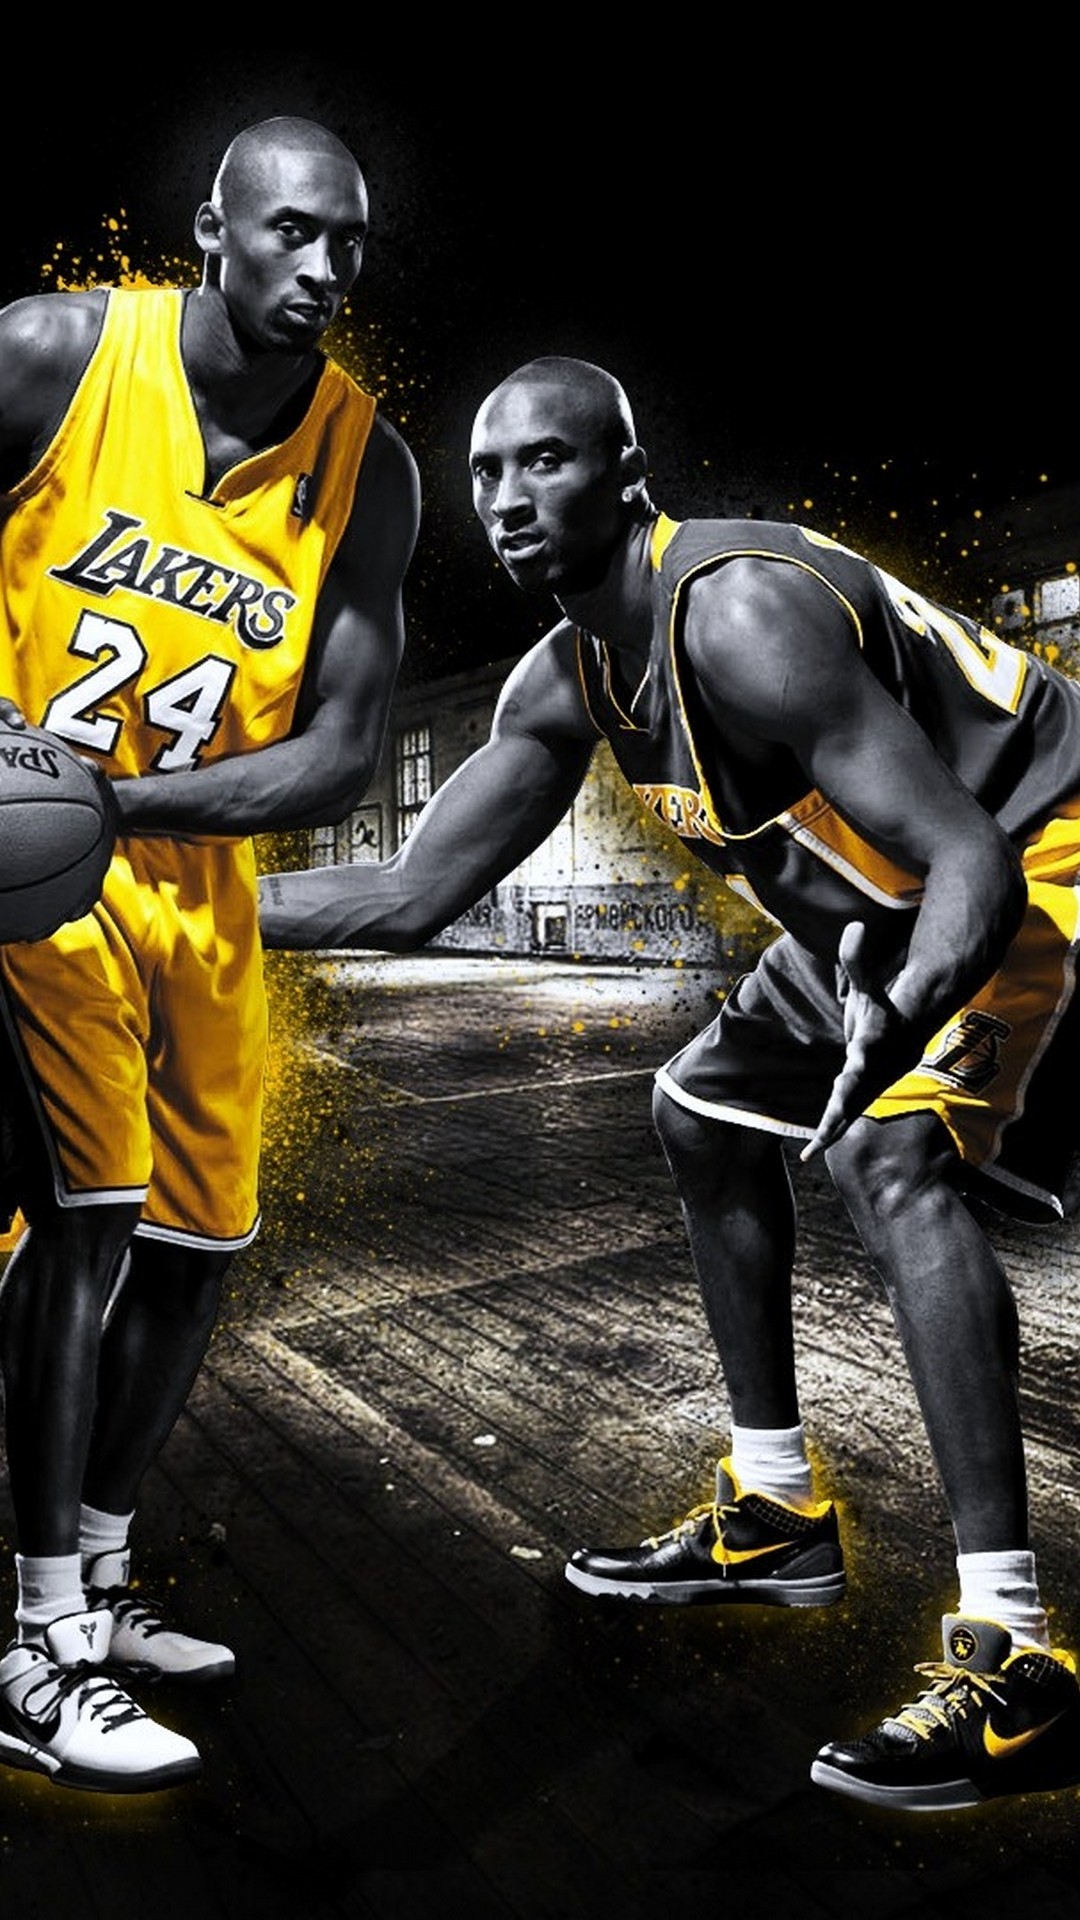 iPhone Wallpaper HD Basketball Games | 2021 Basketball ...